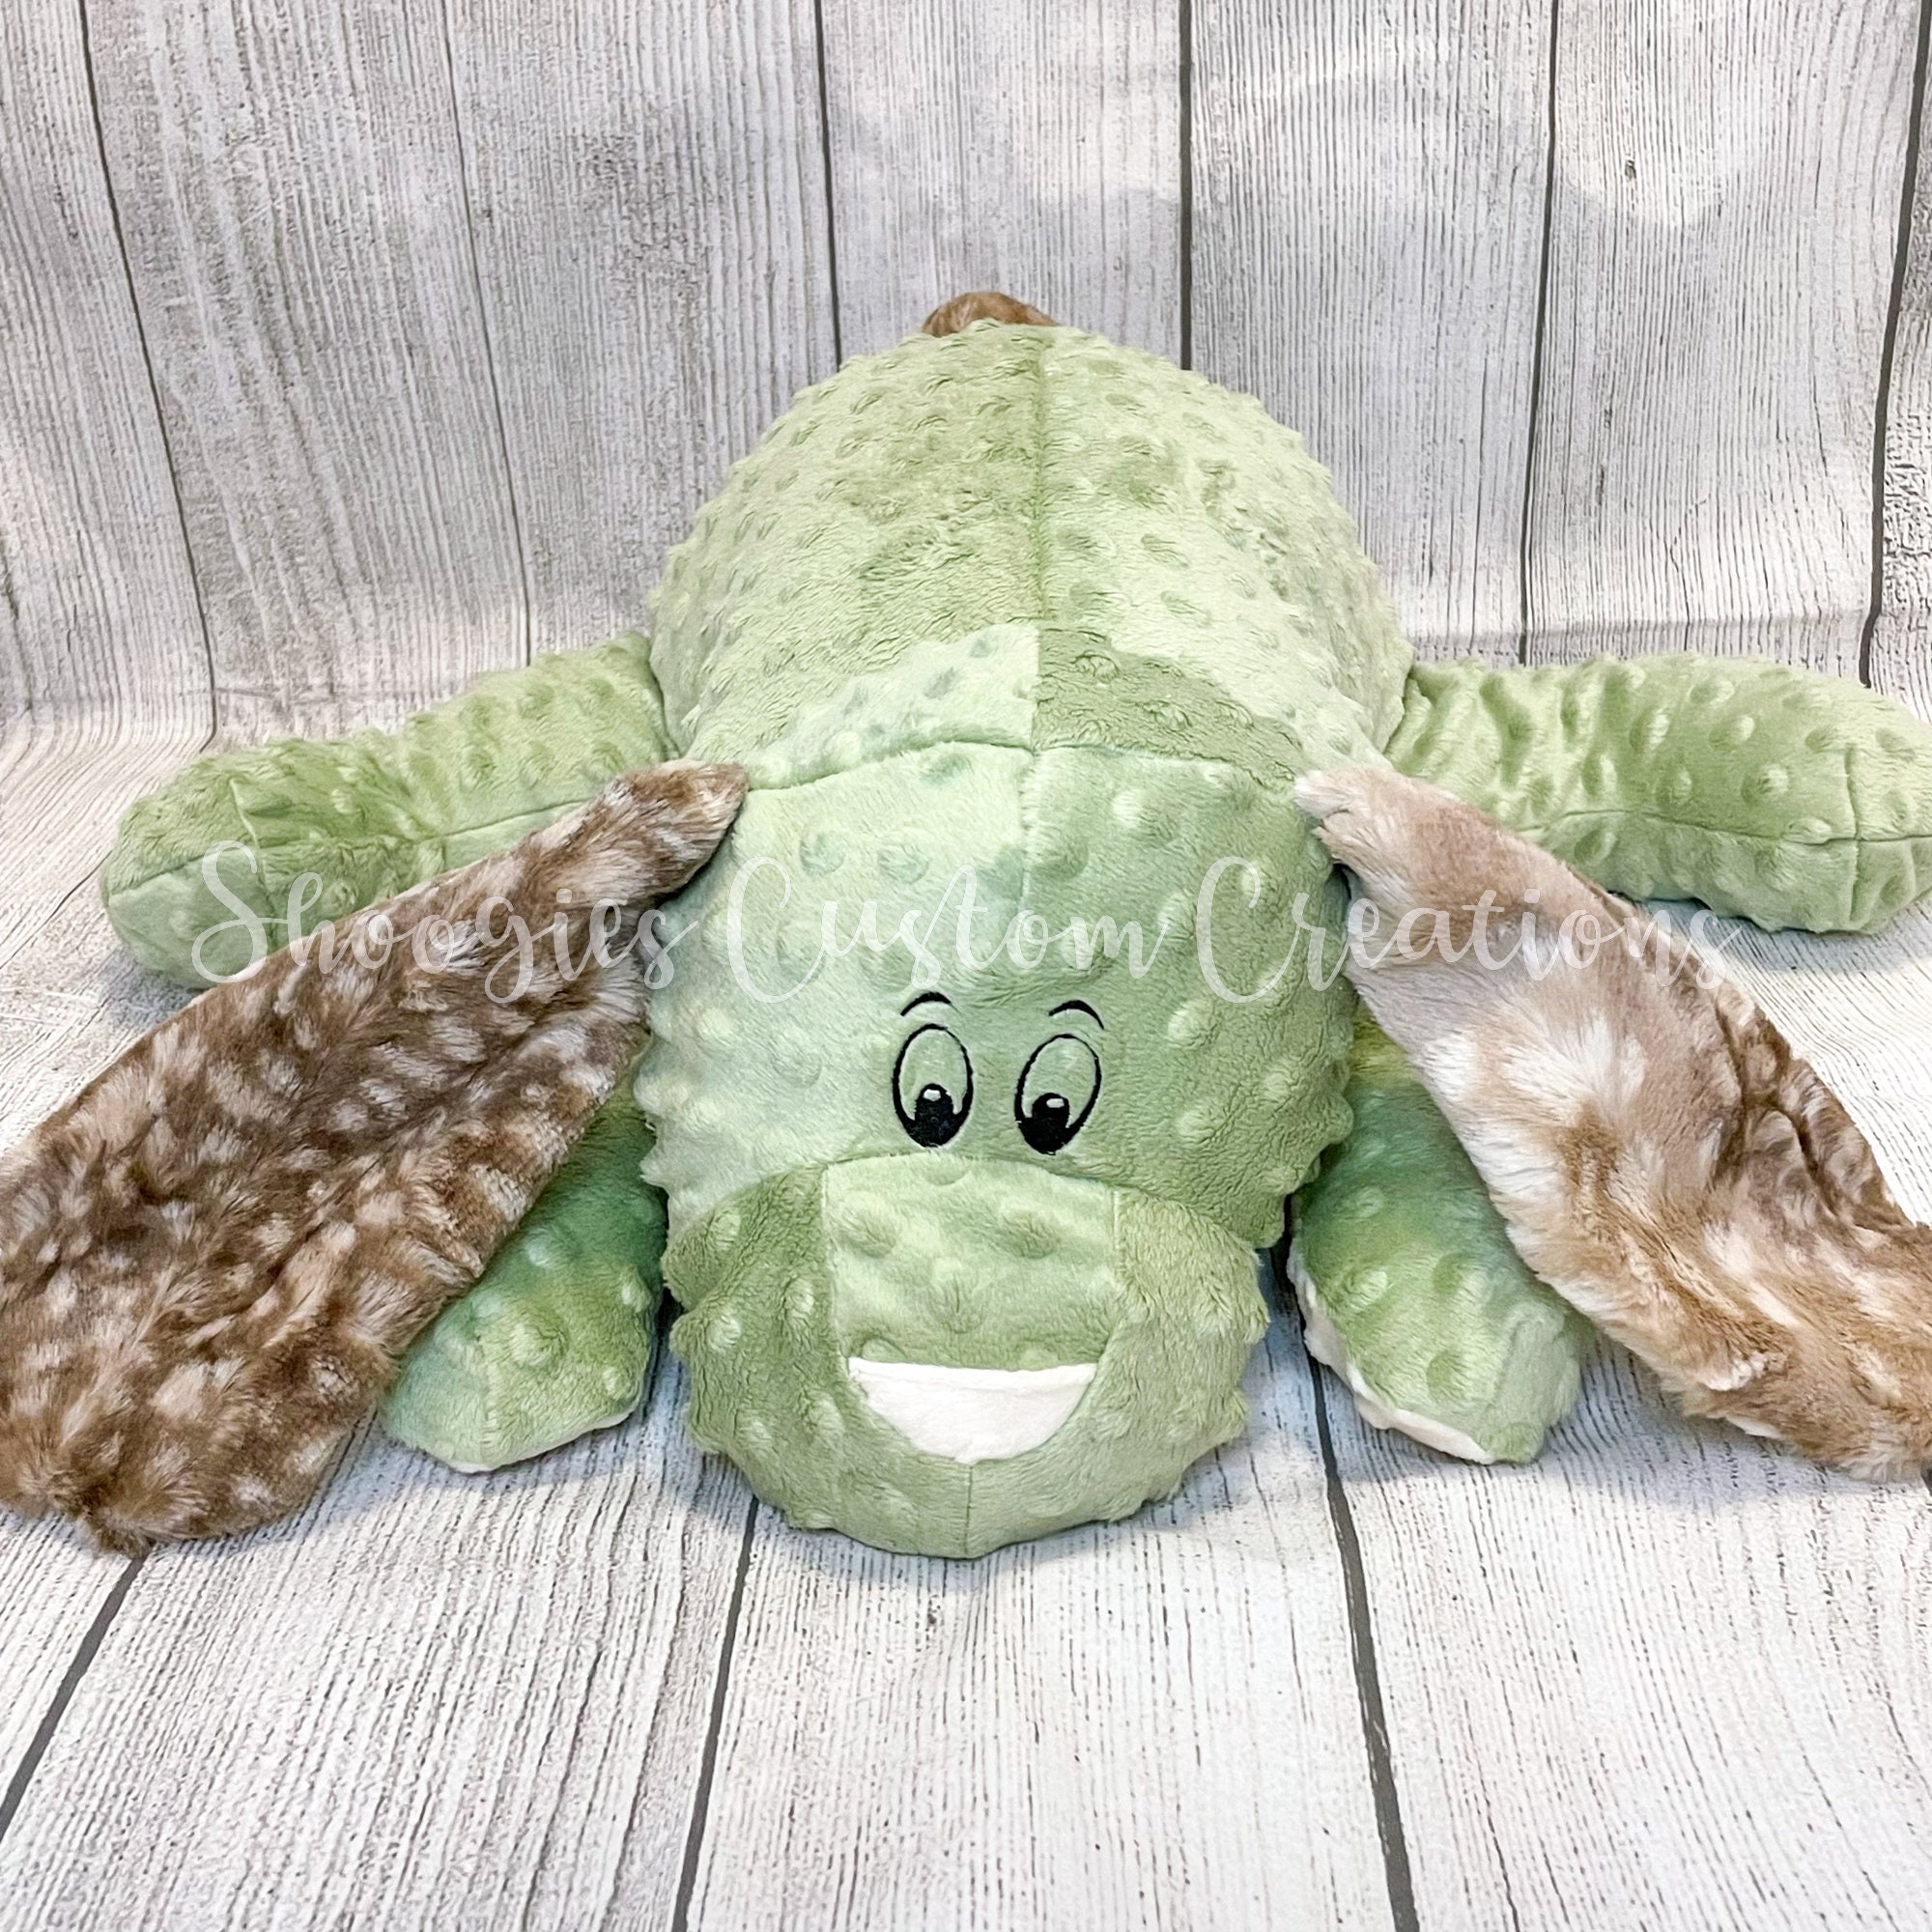 Minky Stuffed Animal - Etsy